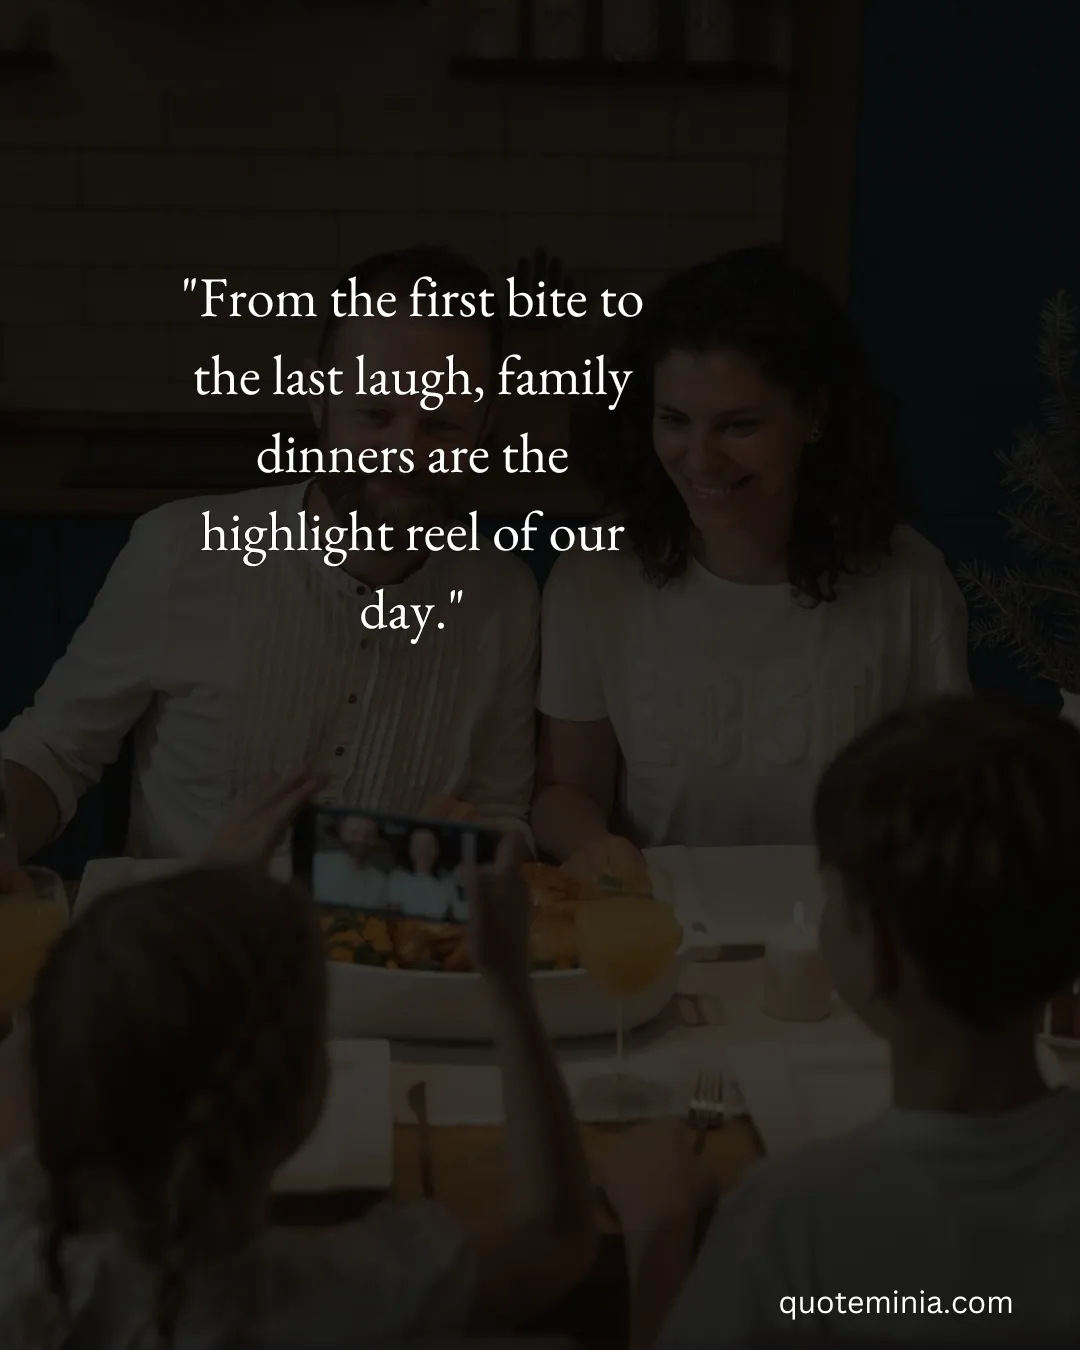 Family Dinner Quotes for Instagram 2